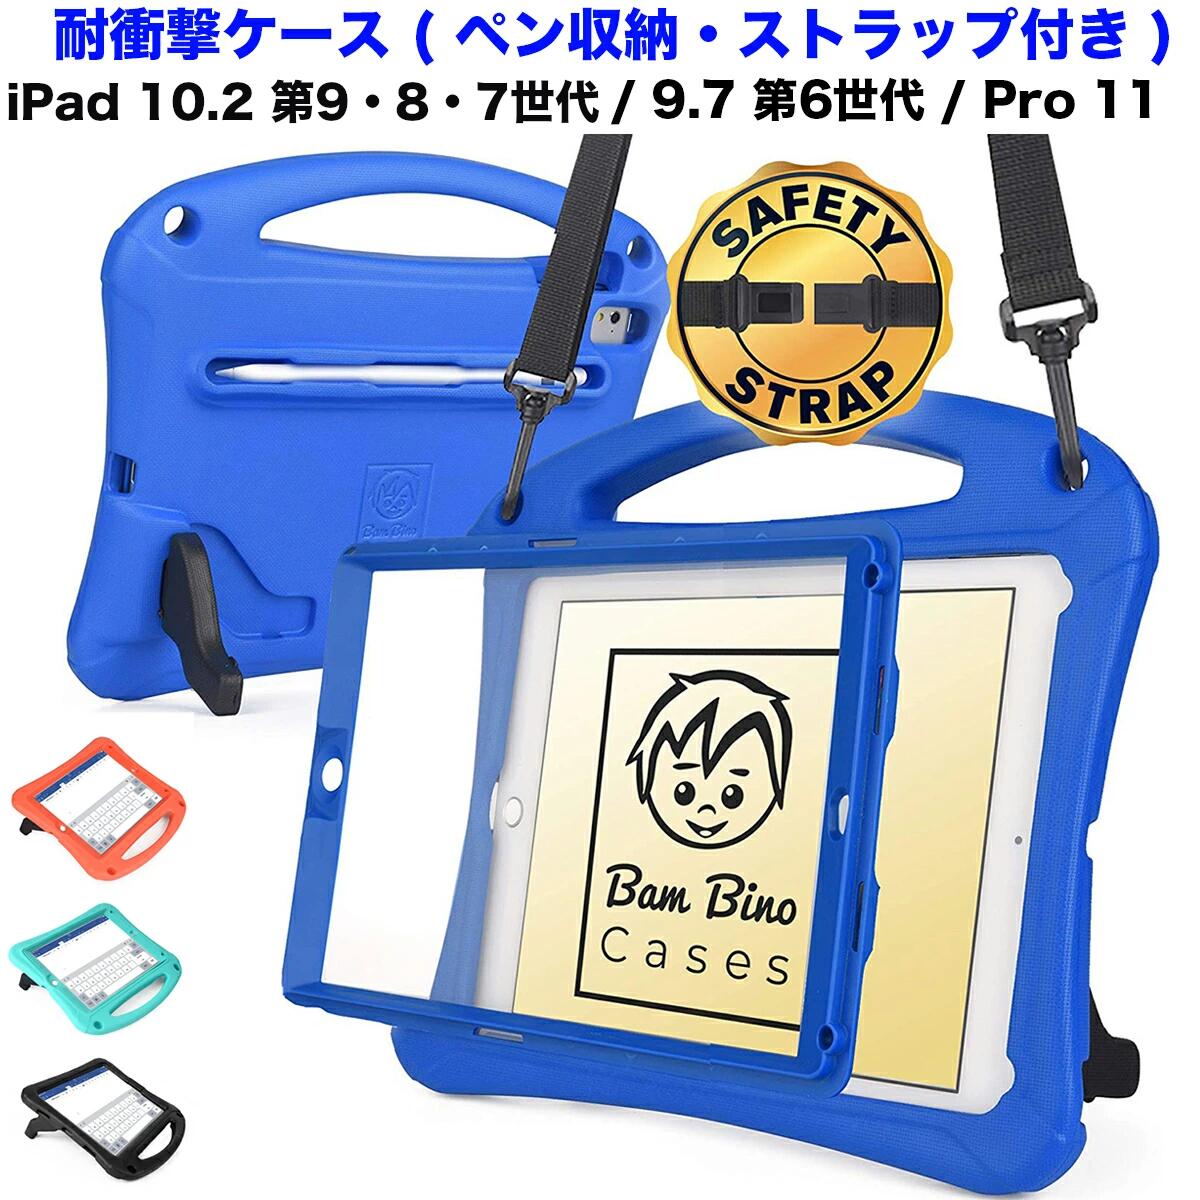 apple pencil 対応 ペン収納 可愛い ストラップ付き 超軽量衝撃吸収キッズケース iPad 10.2 2021・2020・2019 / 9.7 2018 / Air4 10.9/ Air3/ Air2/ Air/ Pro 9.7/ Pro 11 / mini 1,2,3  月間優良ショップ受賞 Bam Bino Cases Space Suit iPad 耐衝撃 ケース【 10.2 第9世代 第8世代 第7世代 第6世代 】カバー キッズ 子供 子供用 ショルダー ストラップ かわいい 首